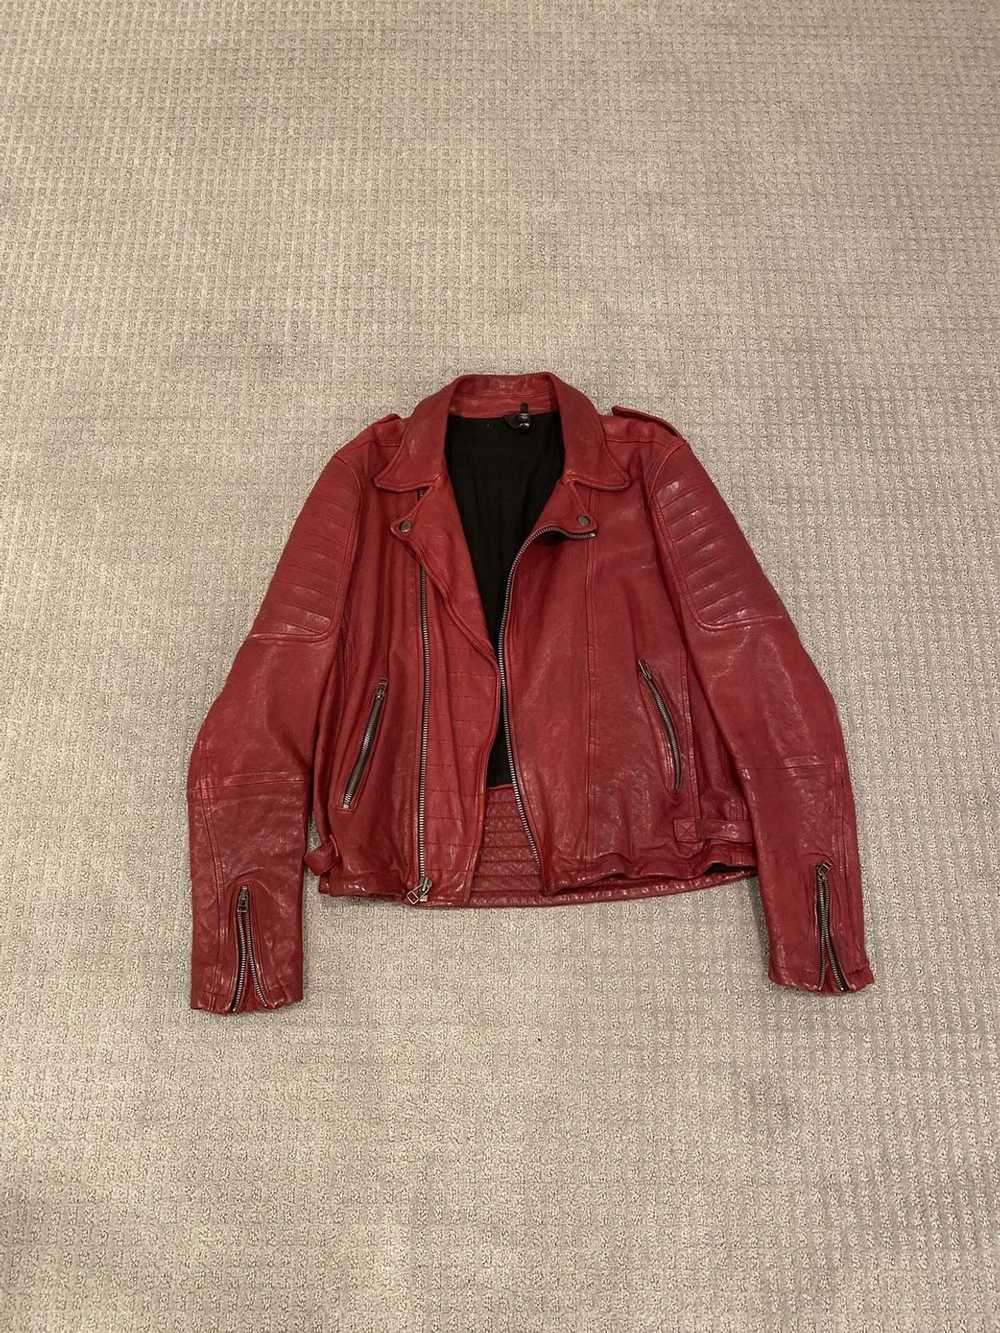 Edun Edun Red Leather Moto Jacket - image 1